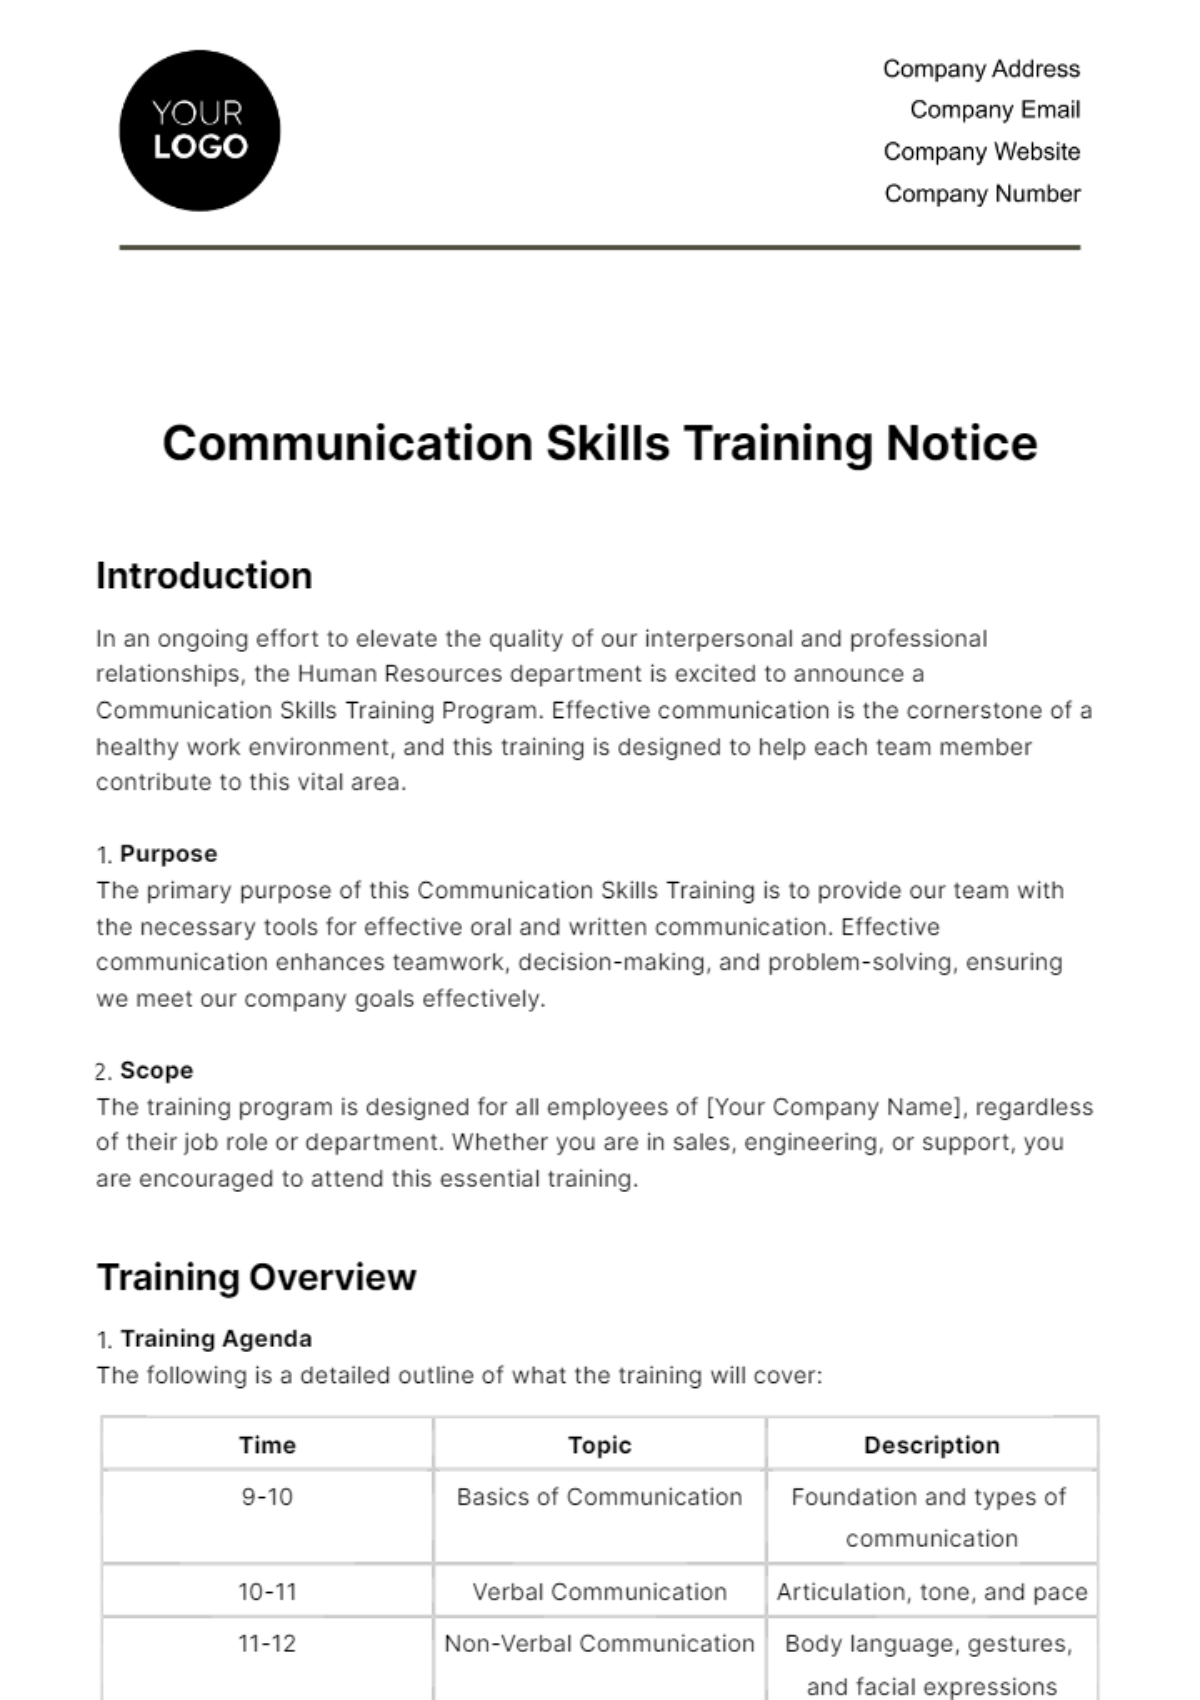 Communication Skills Training Notice HR Template